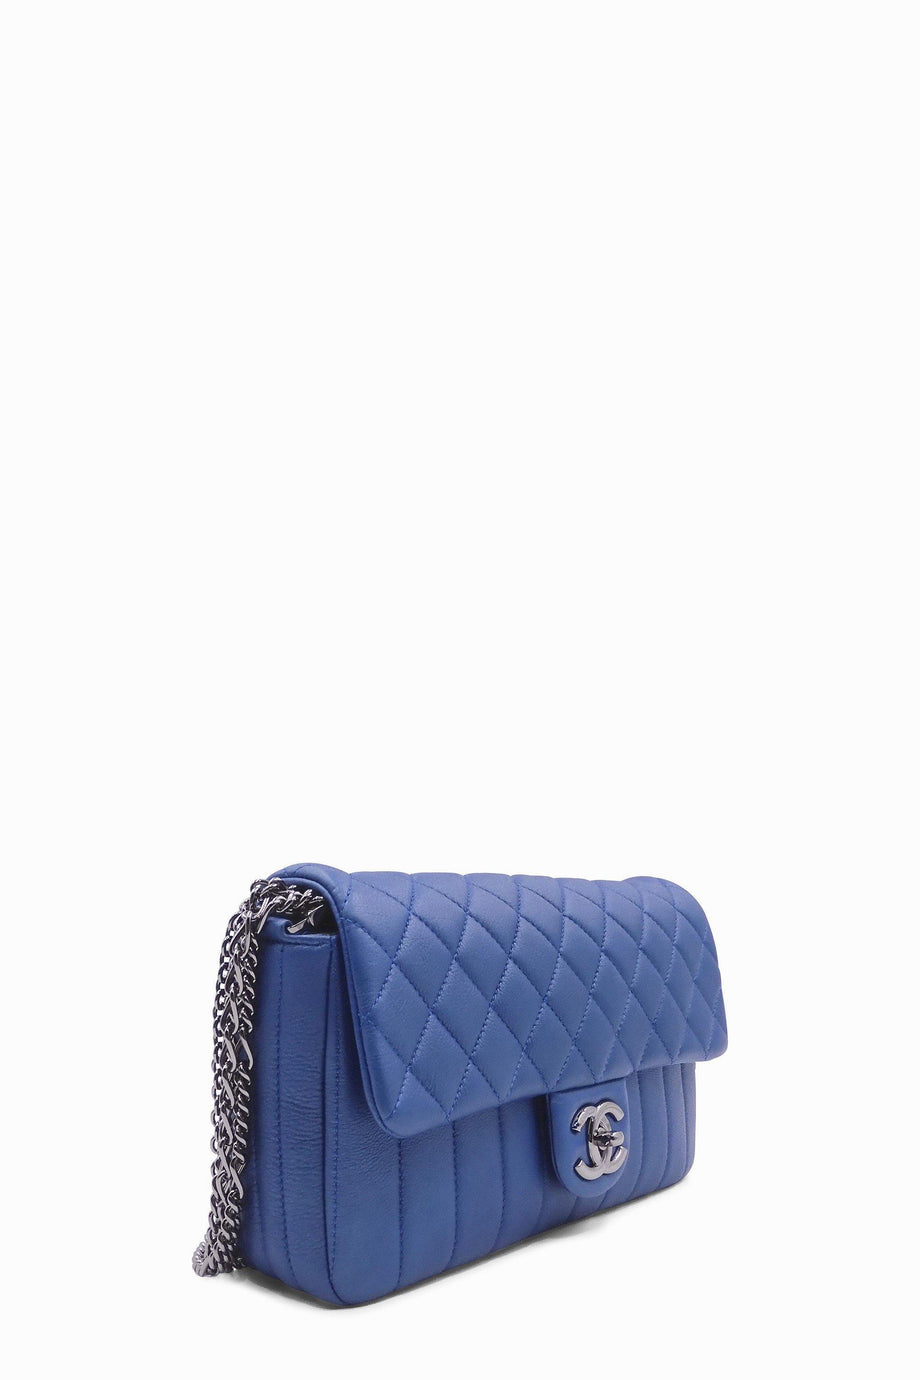 Chanel Medium Flap Bag – Christina's Consignments